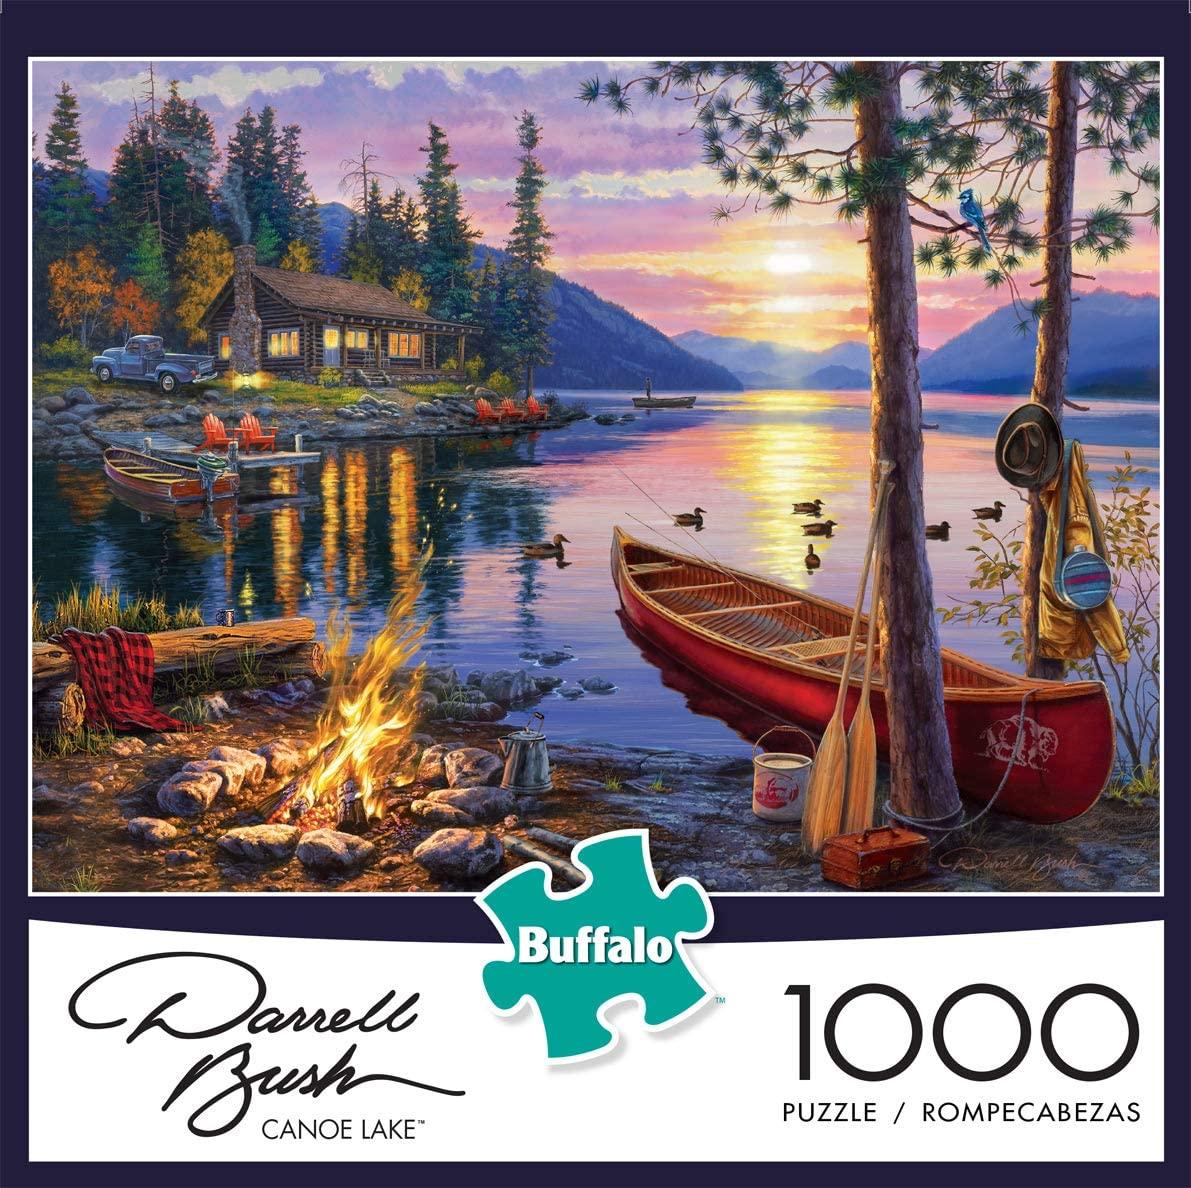 1000-Piece Buffalo Games Canoe Lake Jigsaw Puzzles for $9.97